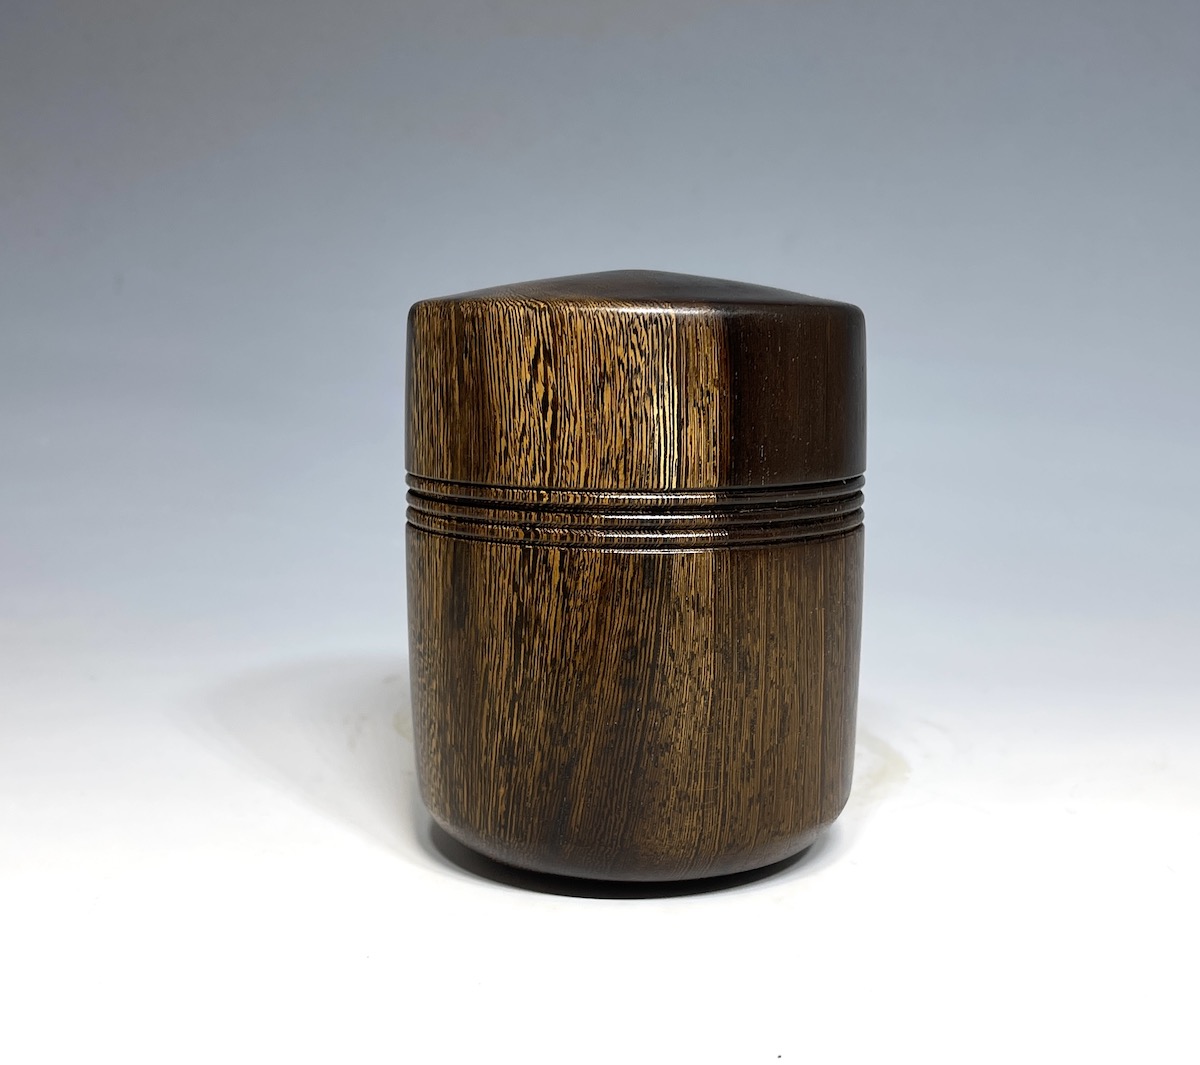 Pheasant wood box